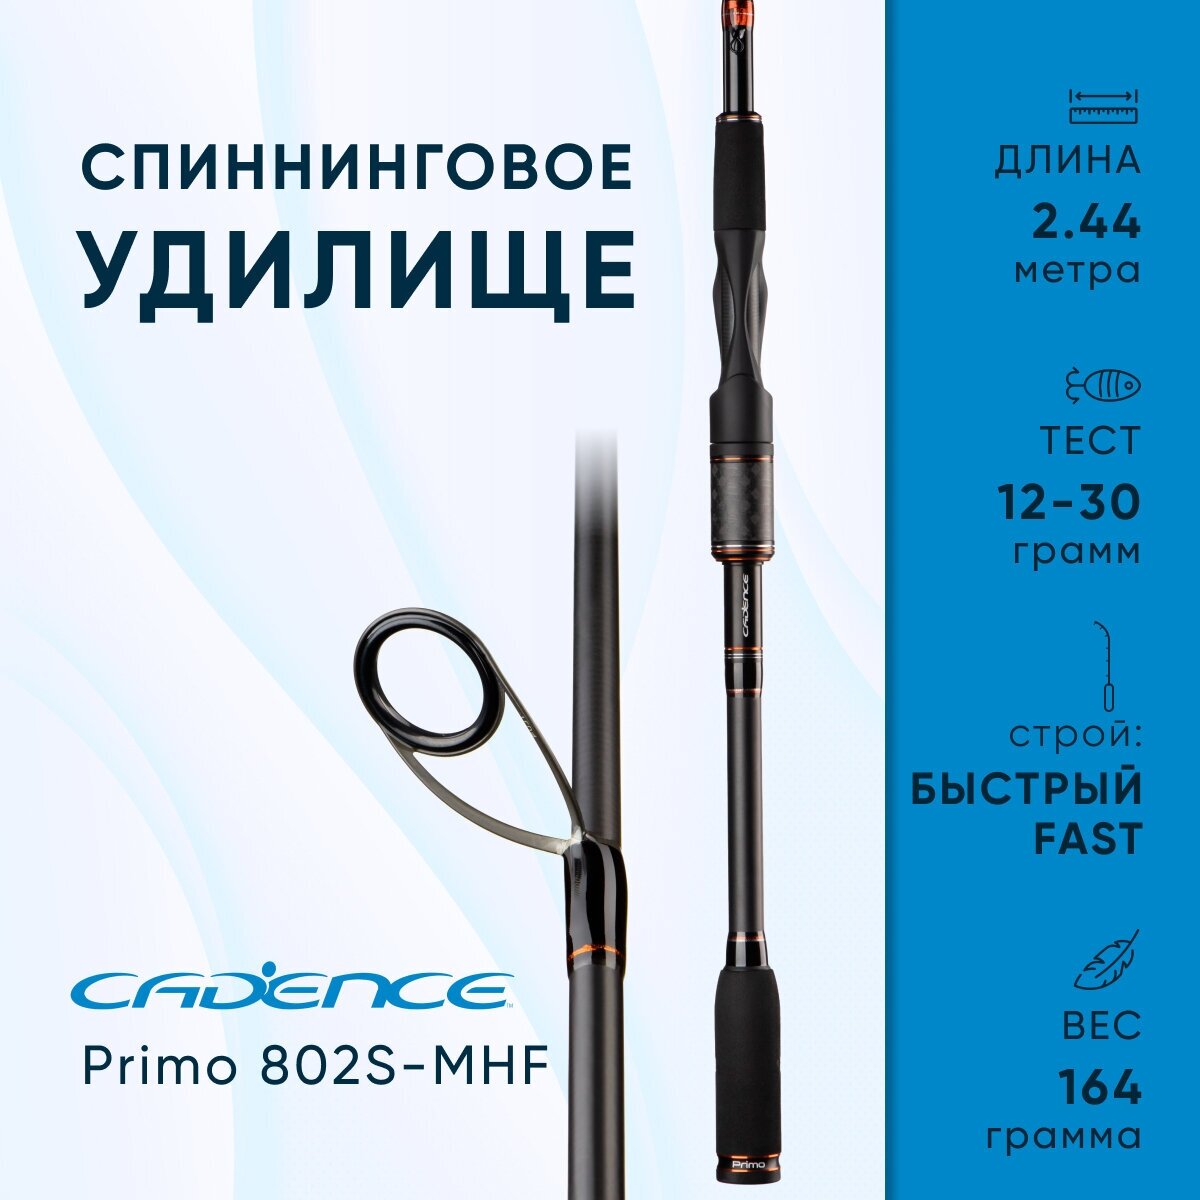 Спиннинговое удилище Cadence Primo 802S-MHF